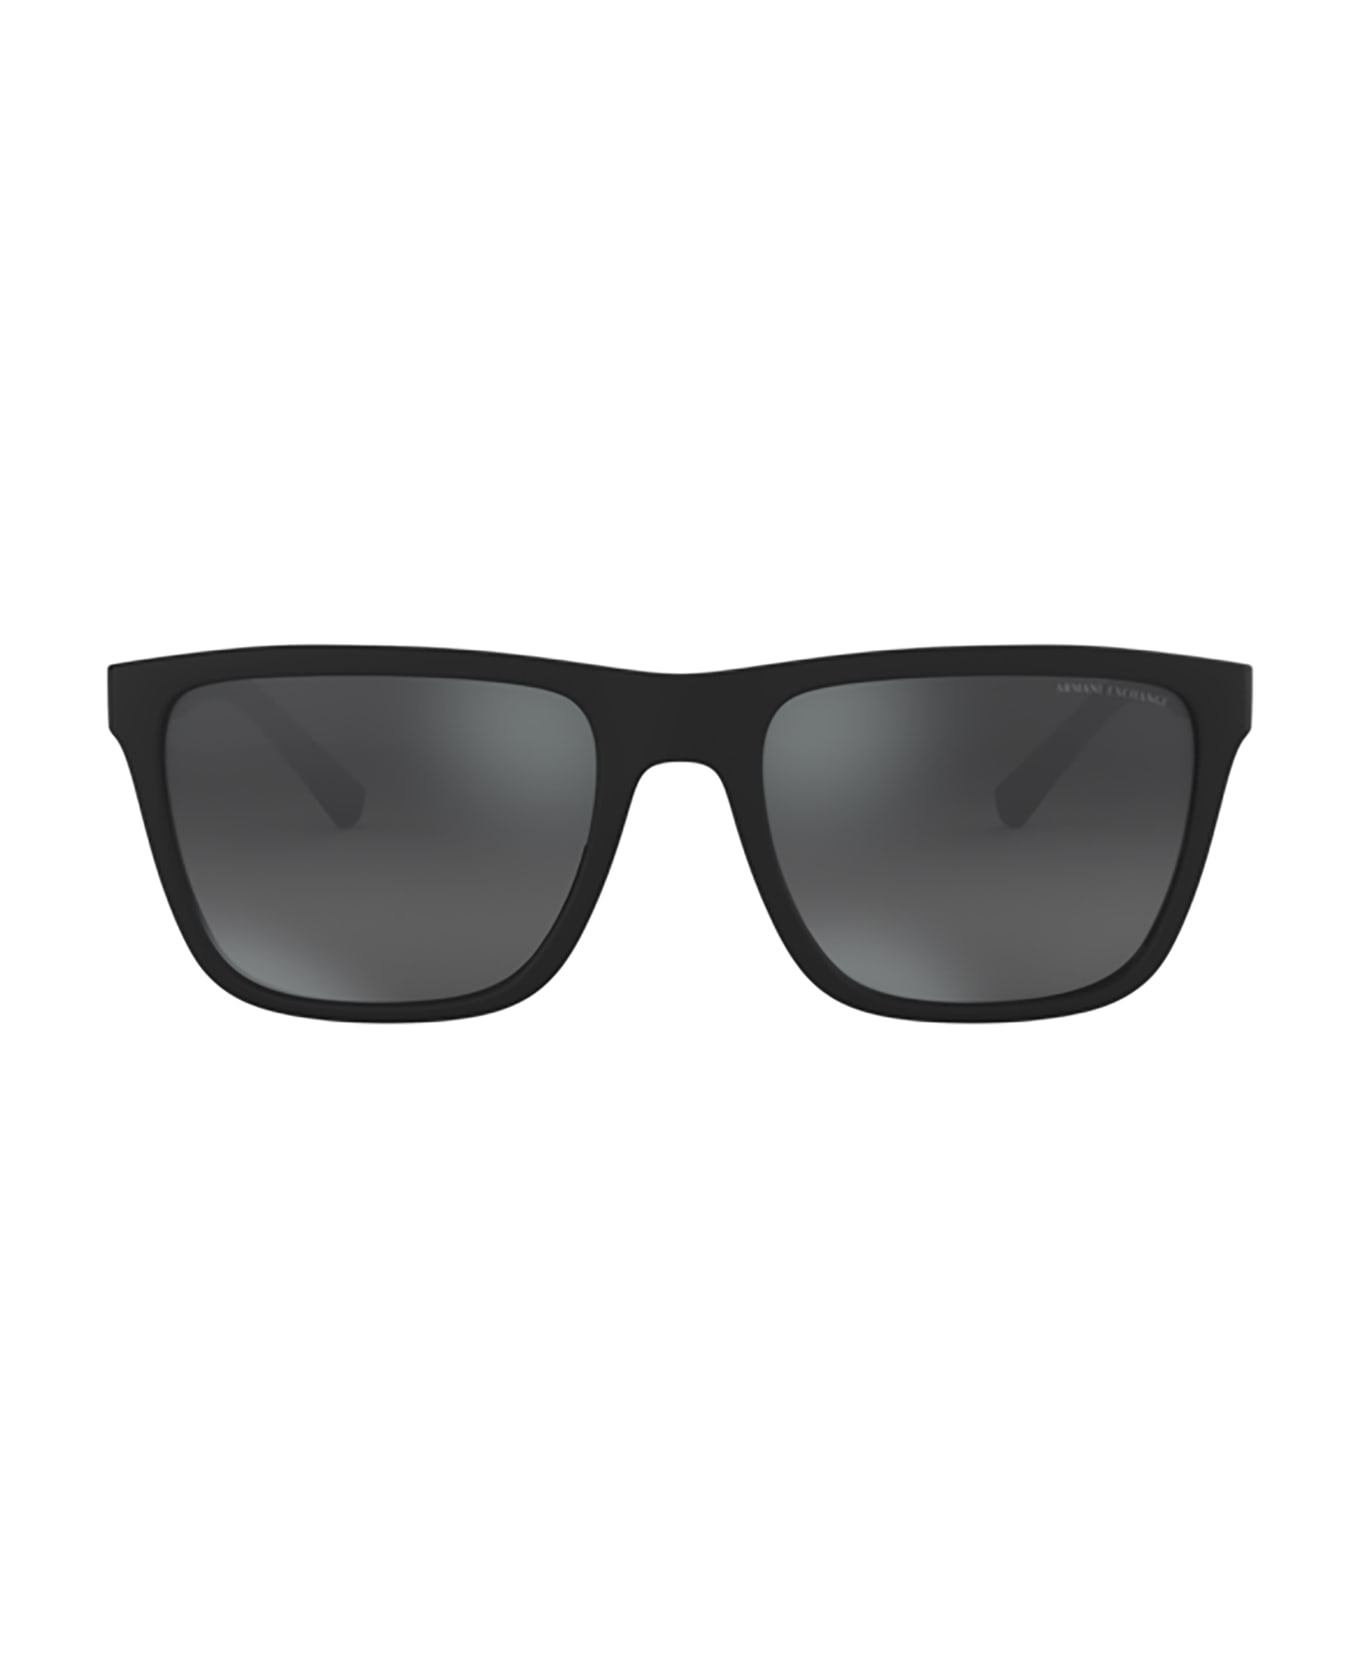 Armani Exchange Ax4080s Matte Black Sunglasses - Matte Black サングラス